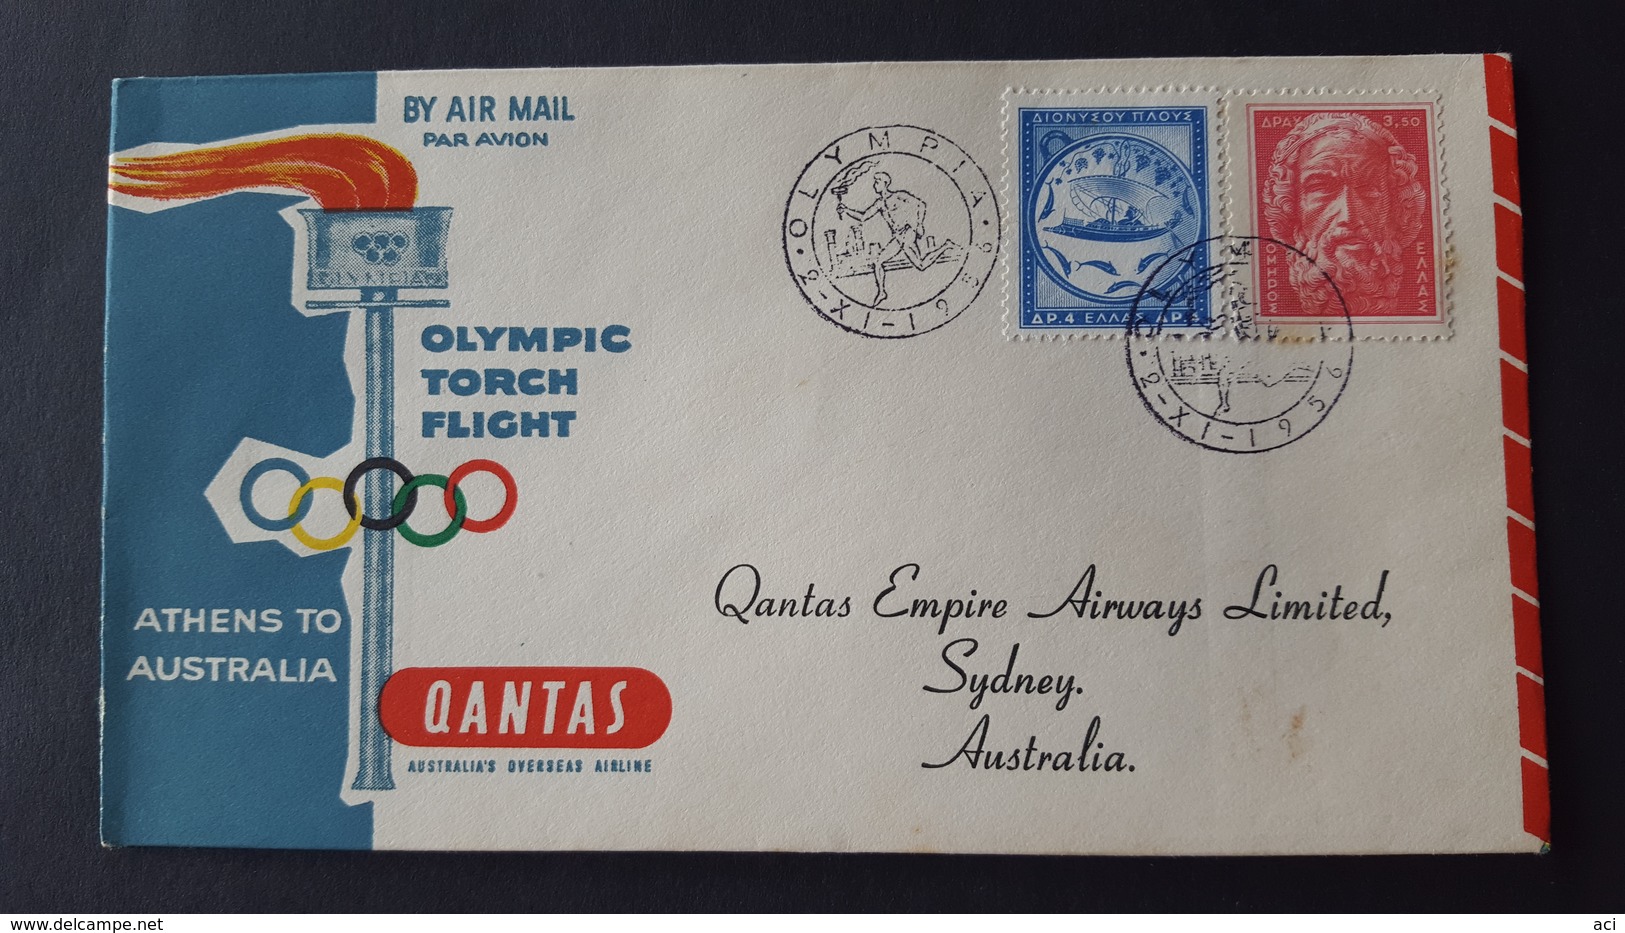 Australia 1956 Qantas Olympic Torch Flight Athens To Australia Souvenir Cover - First Flight Covers